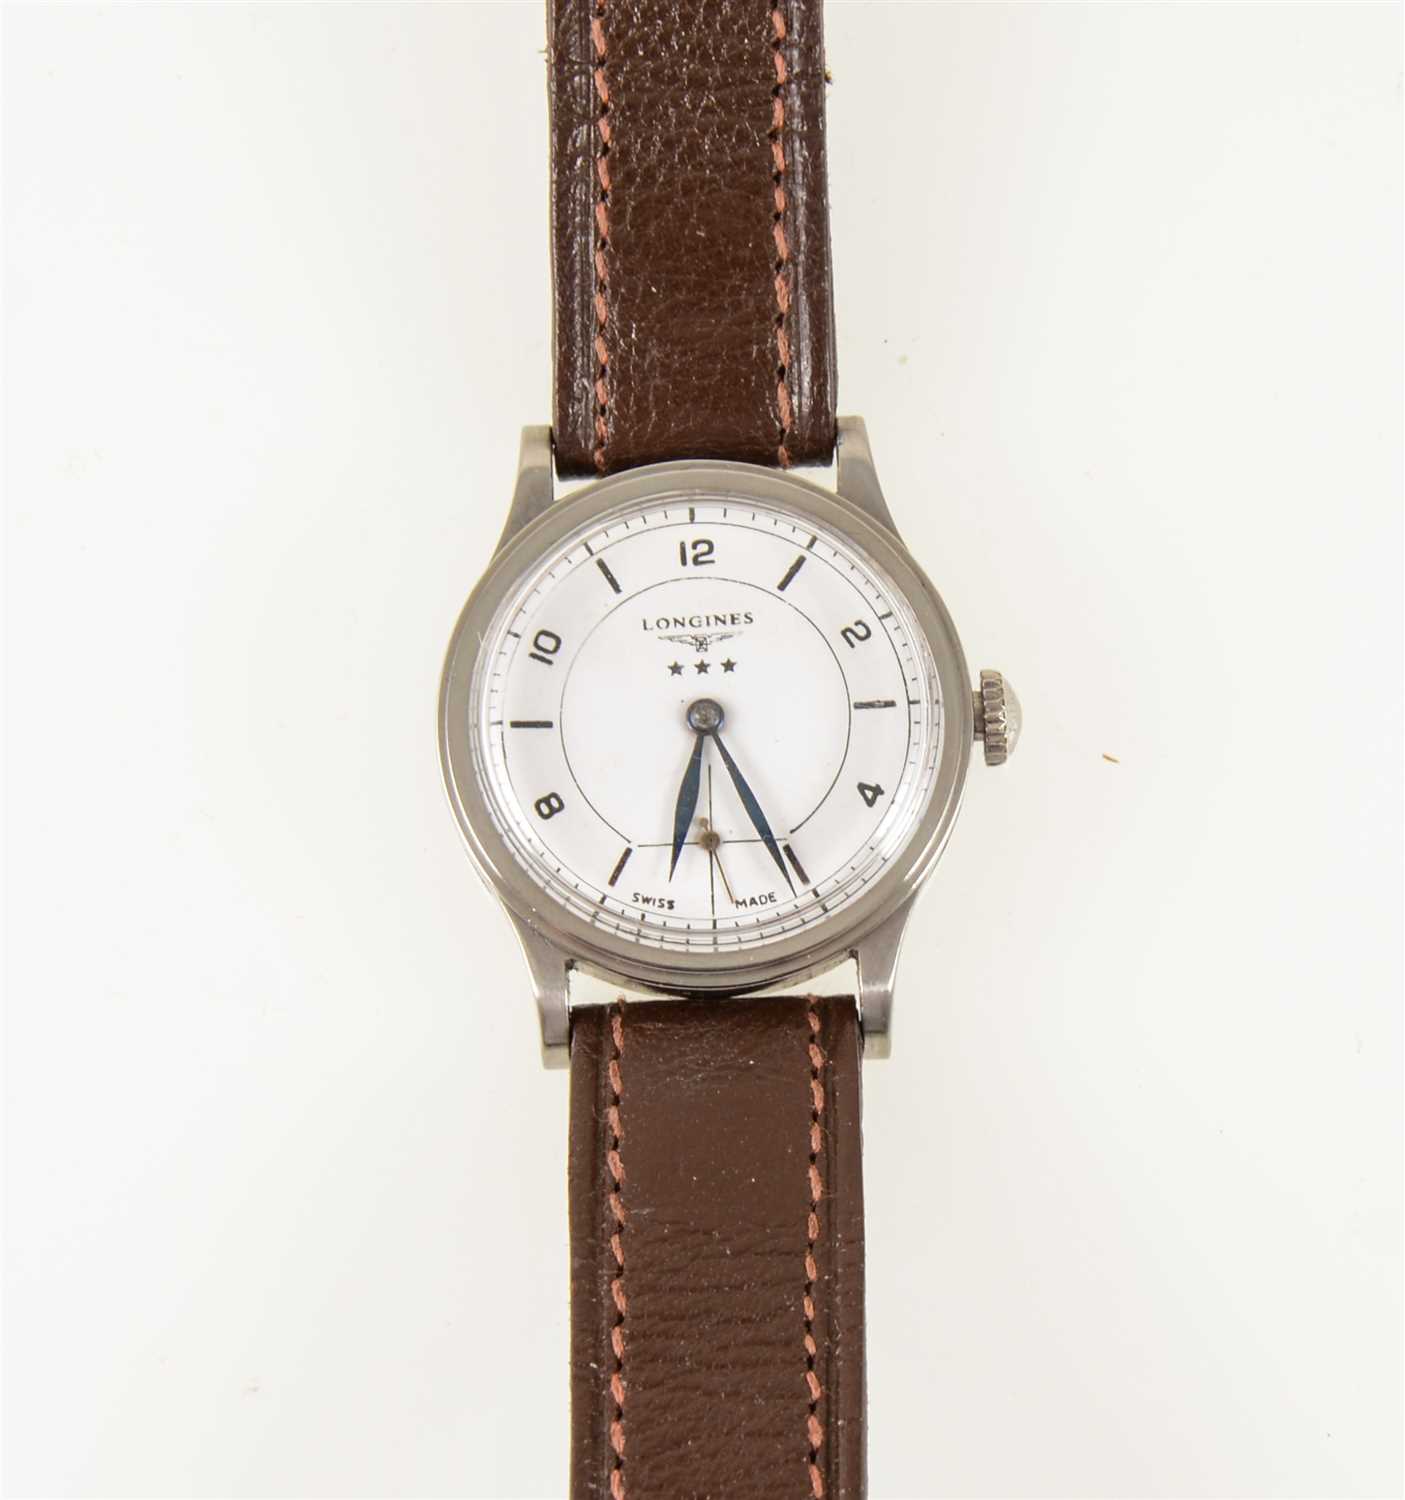 Lot 290 - Longines - a 1930s gentleman's vintage wrist watch